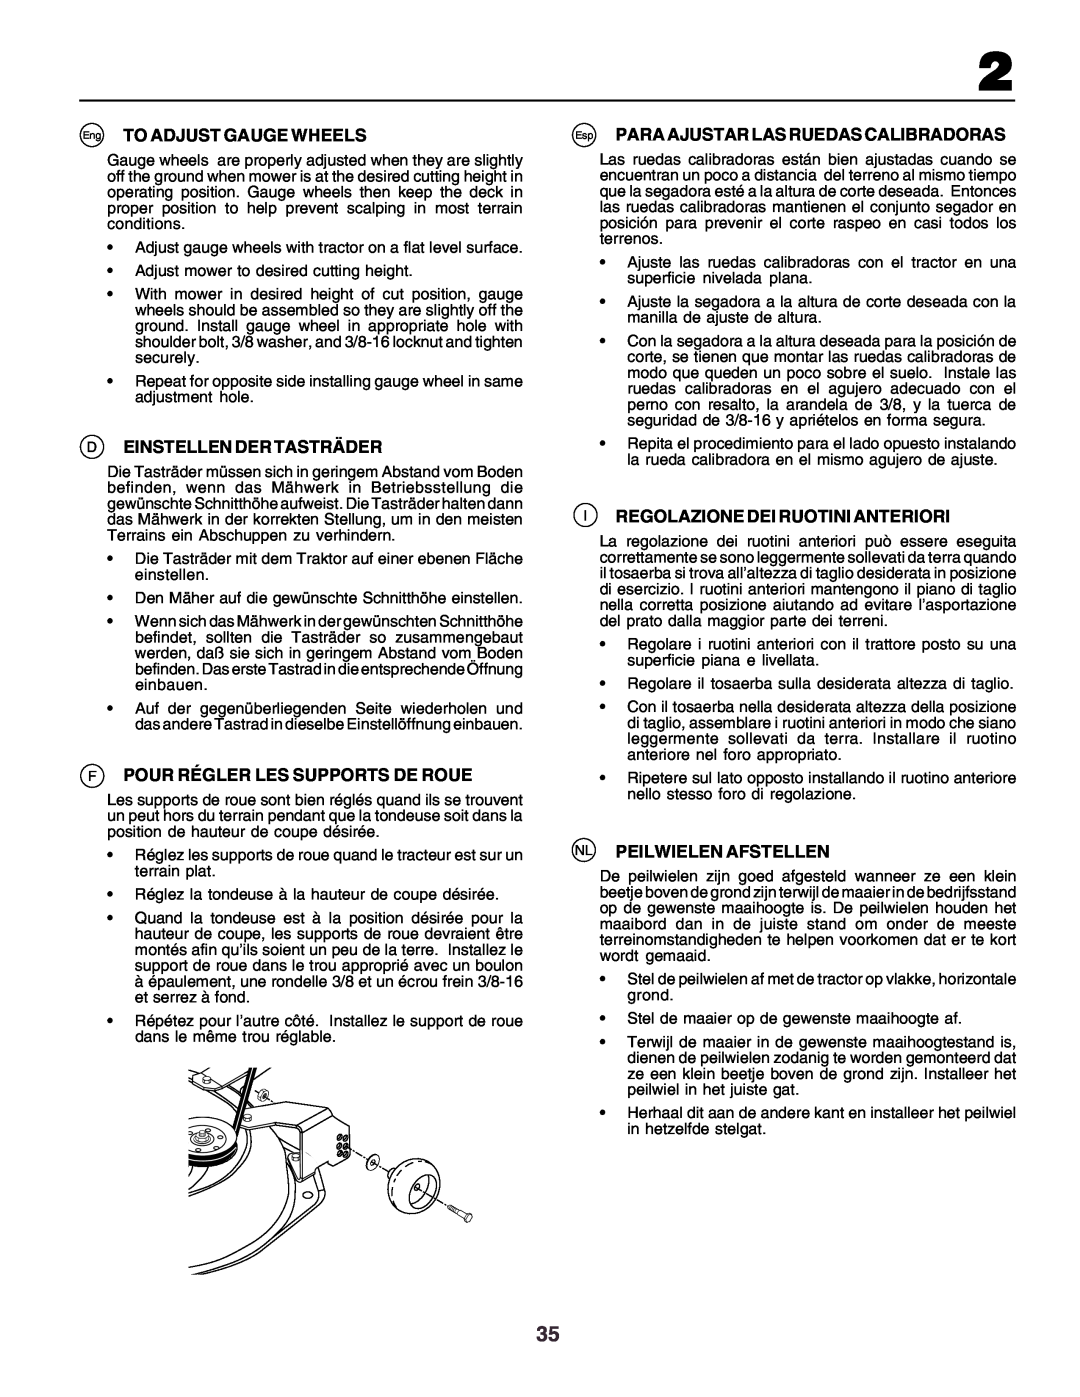 Husqvarna CT130 instruction manual Eng TO ADJUST GAUGE WHEELS, Einstellen Der Tasträder, F Pour Régler Les Supports De Roue 